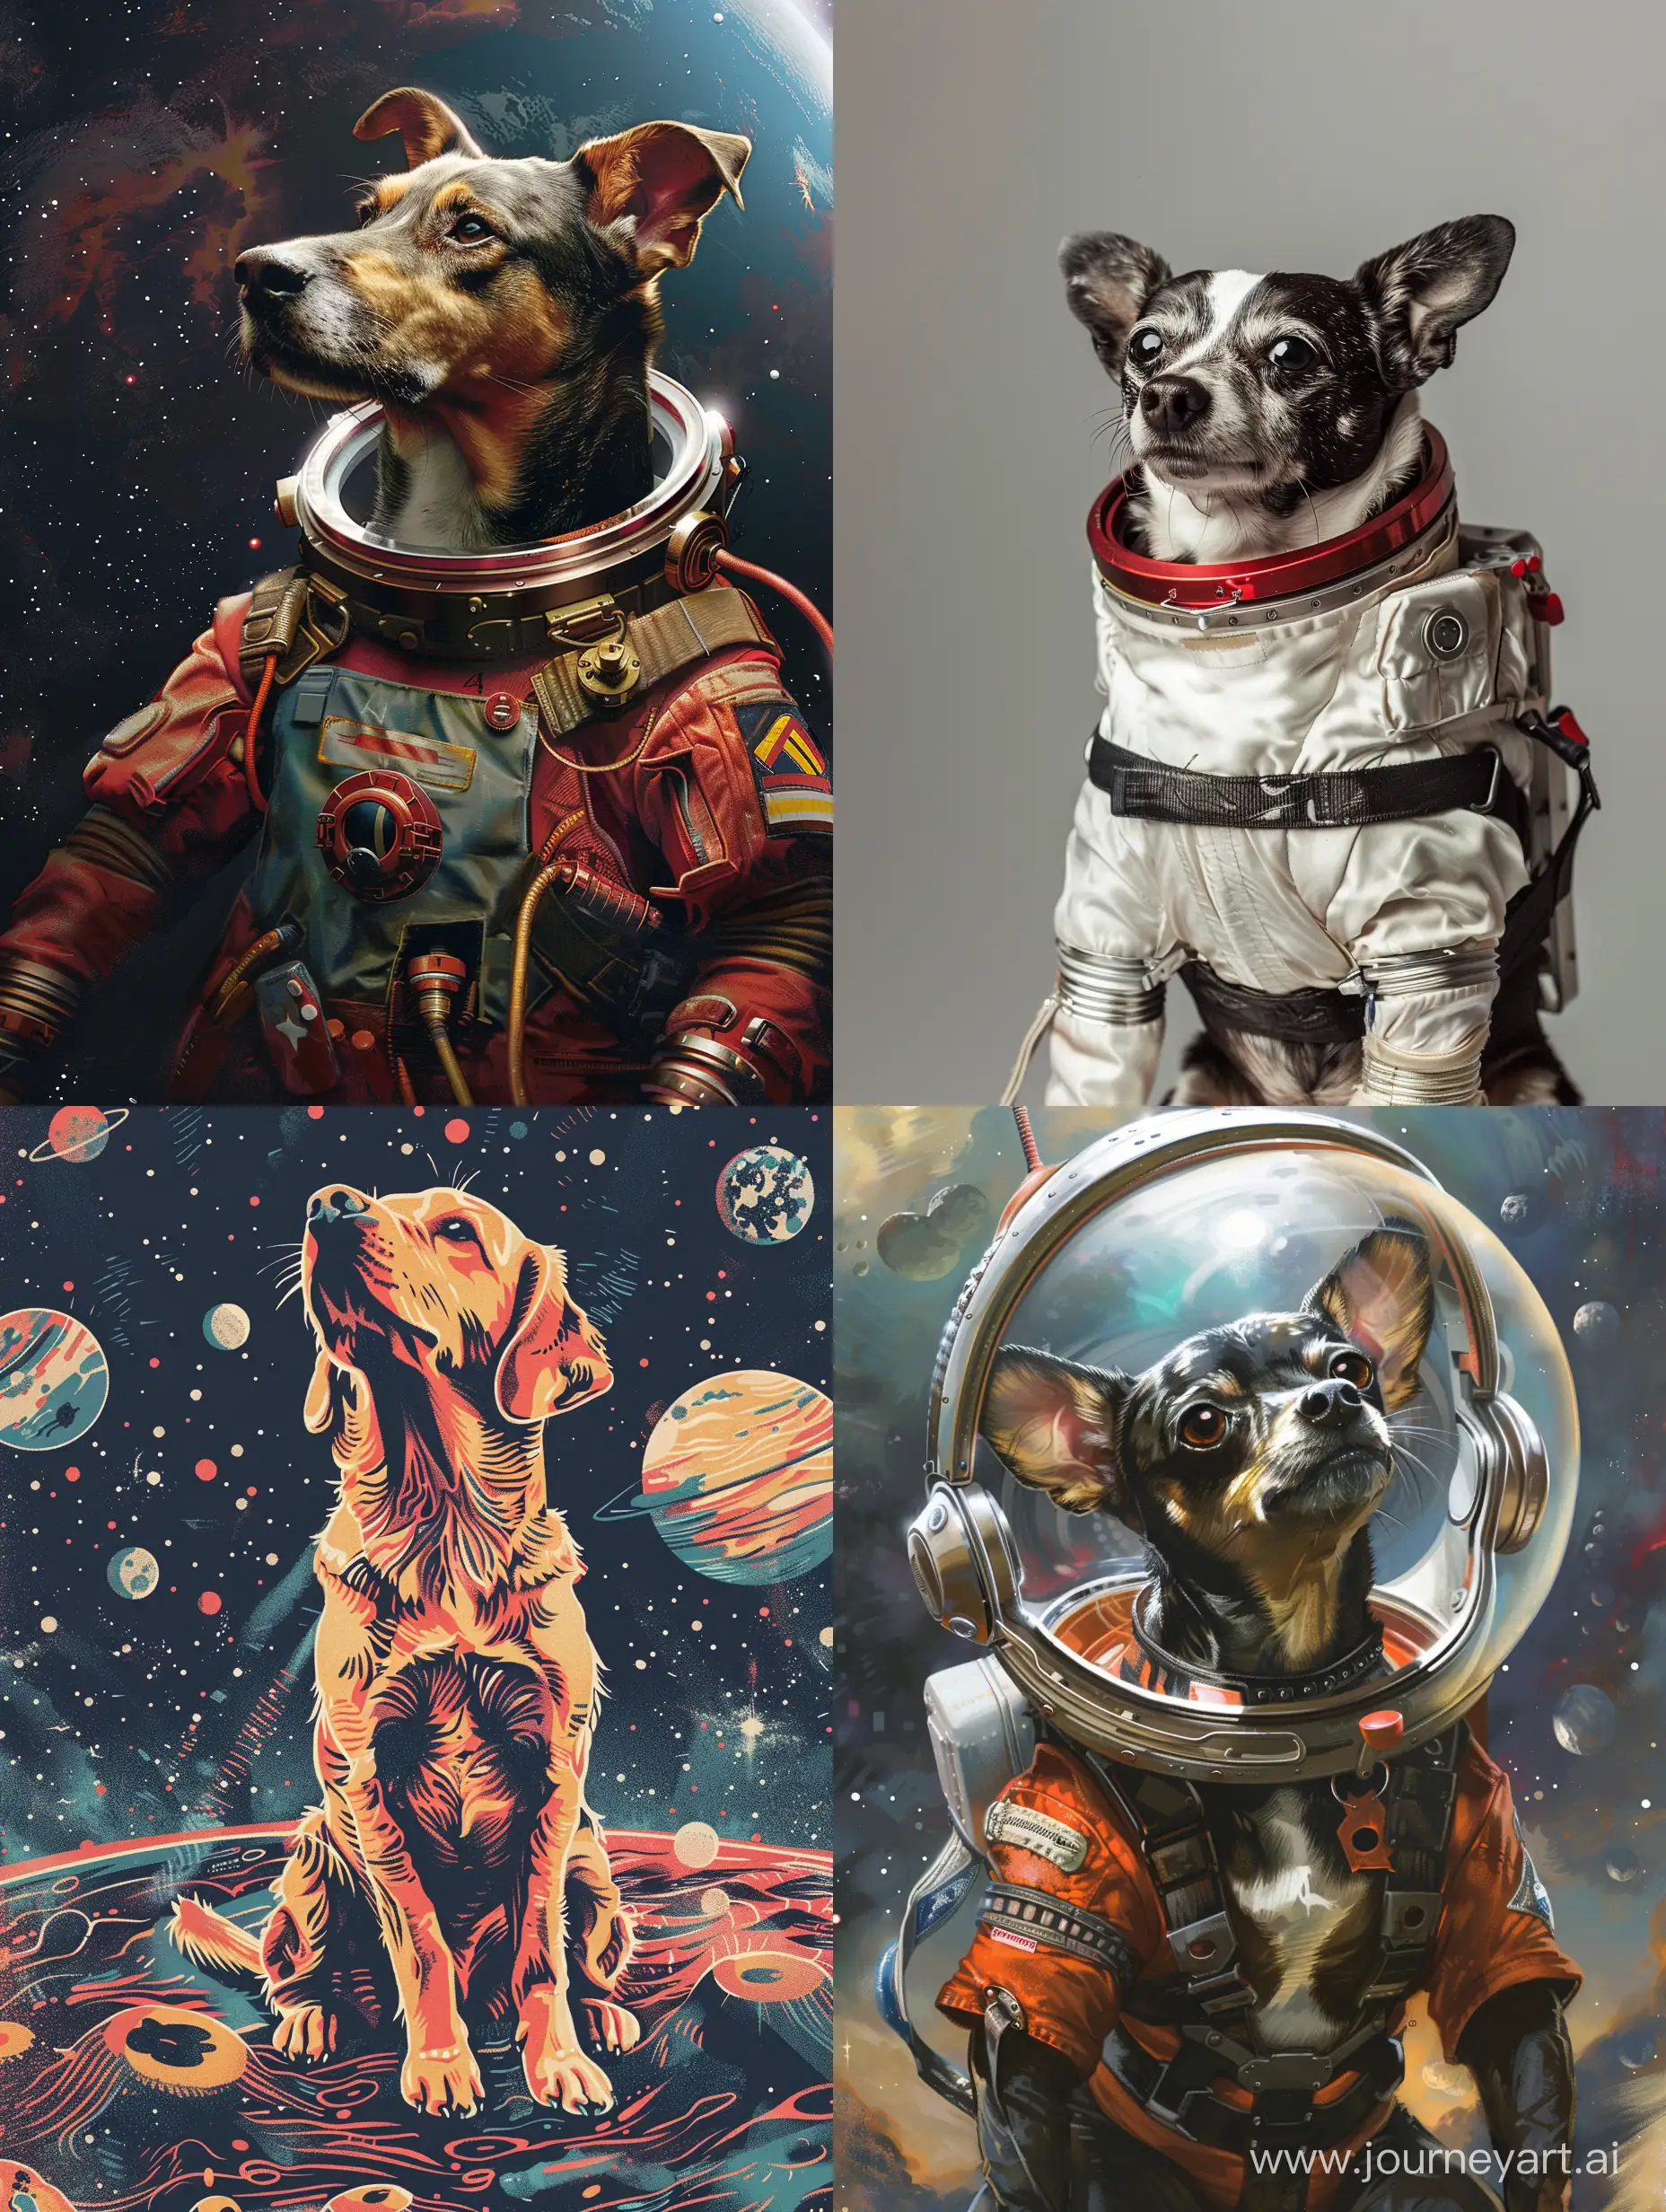 imagine a space dog